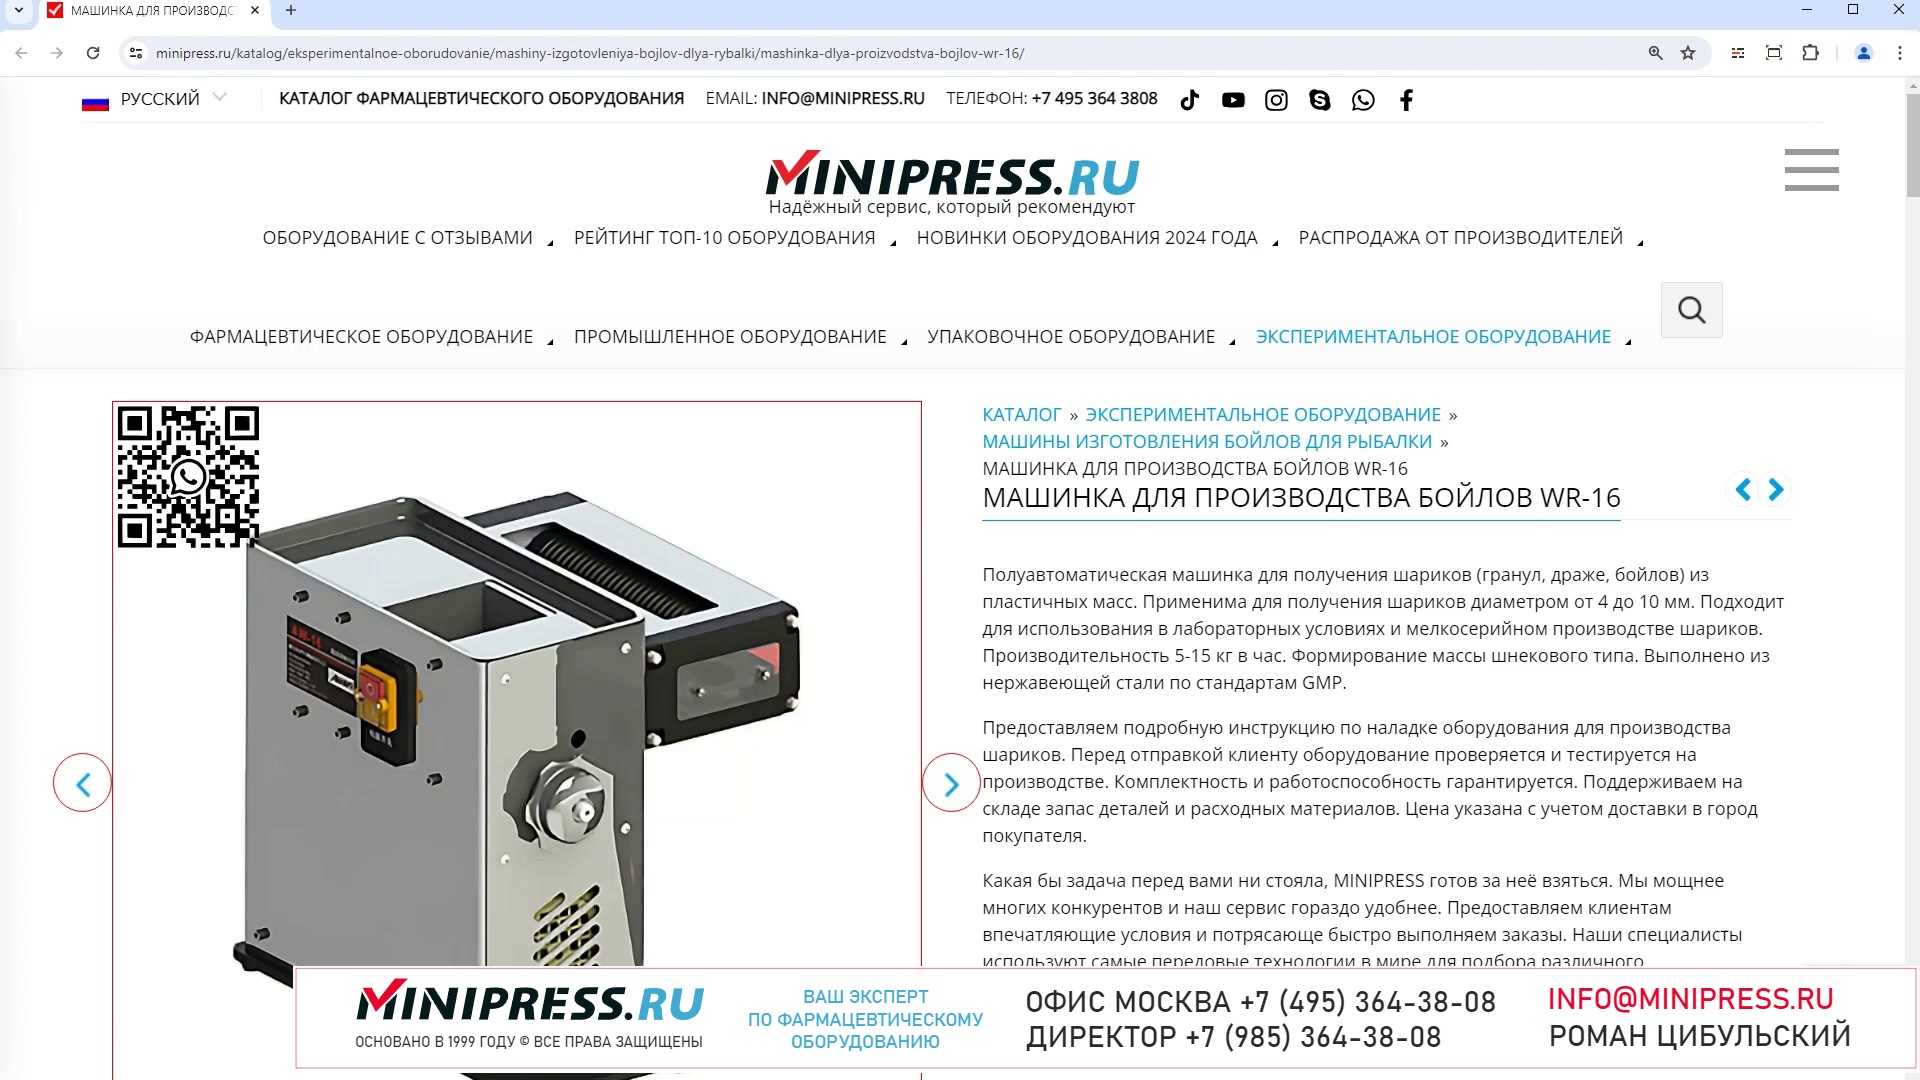 Minipress.ru Машинка для производства бойлов WR-16